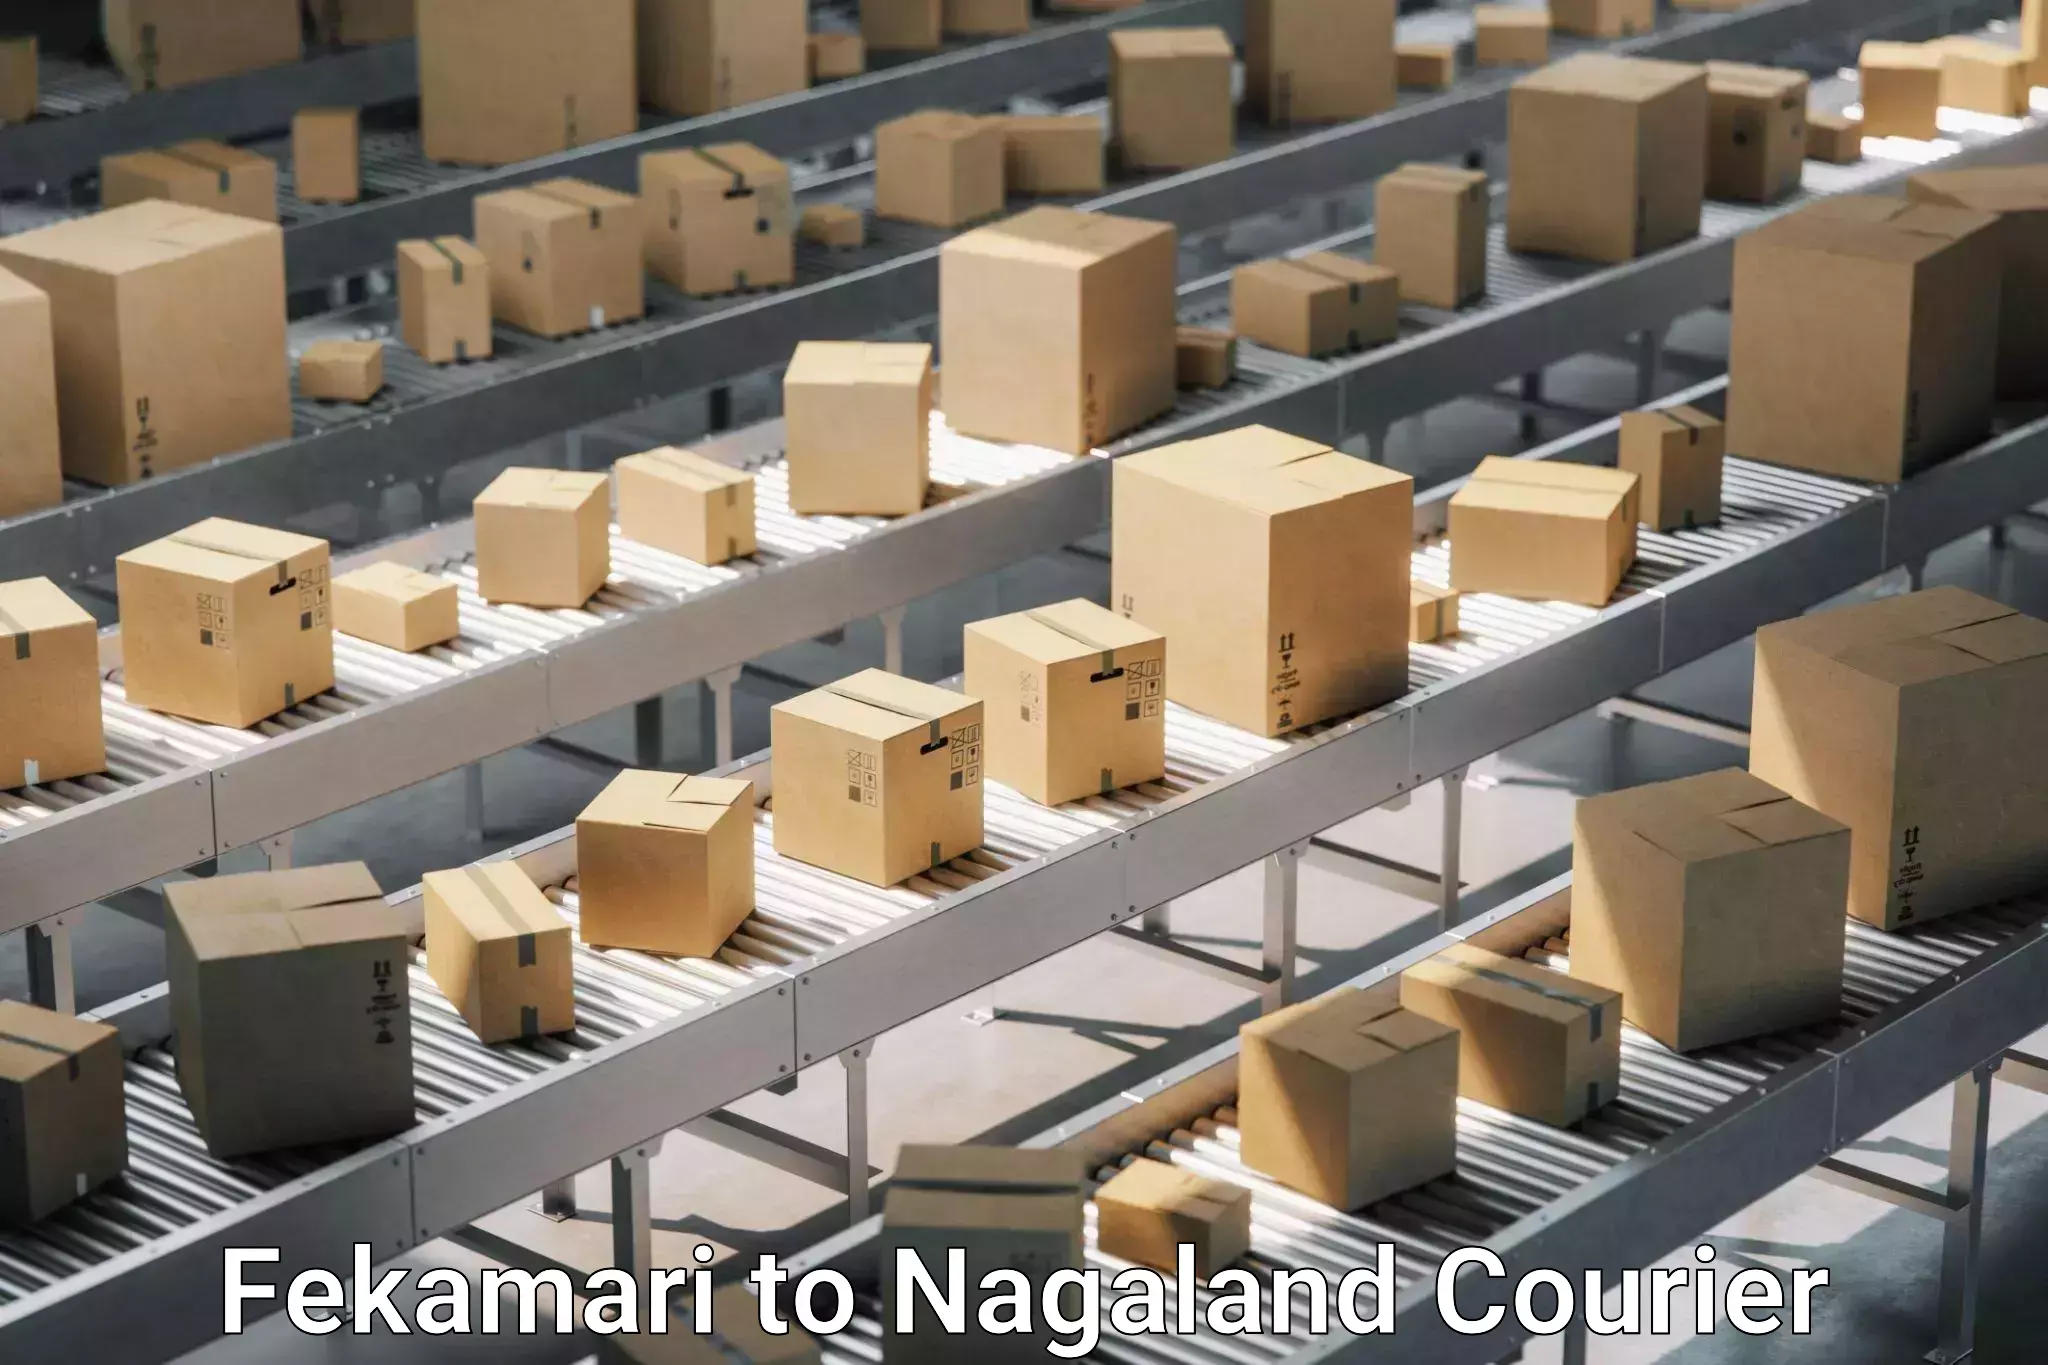 Furniture transport company Fekamari to Nagaland